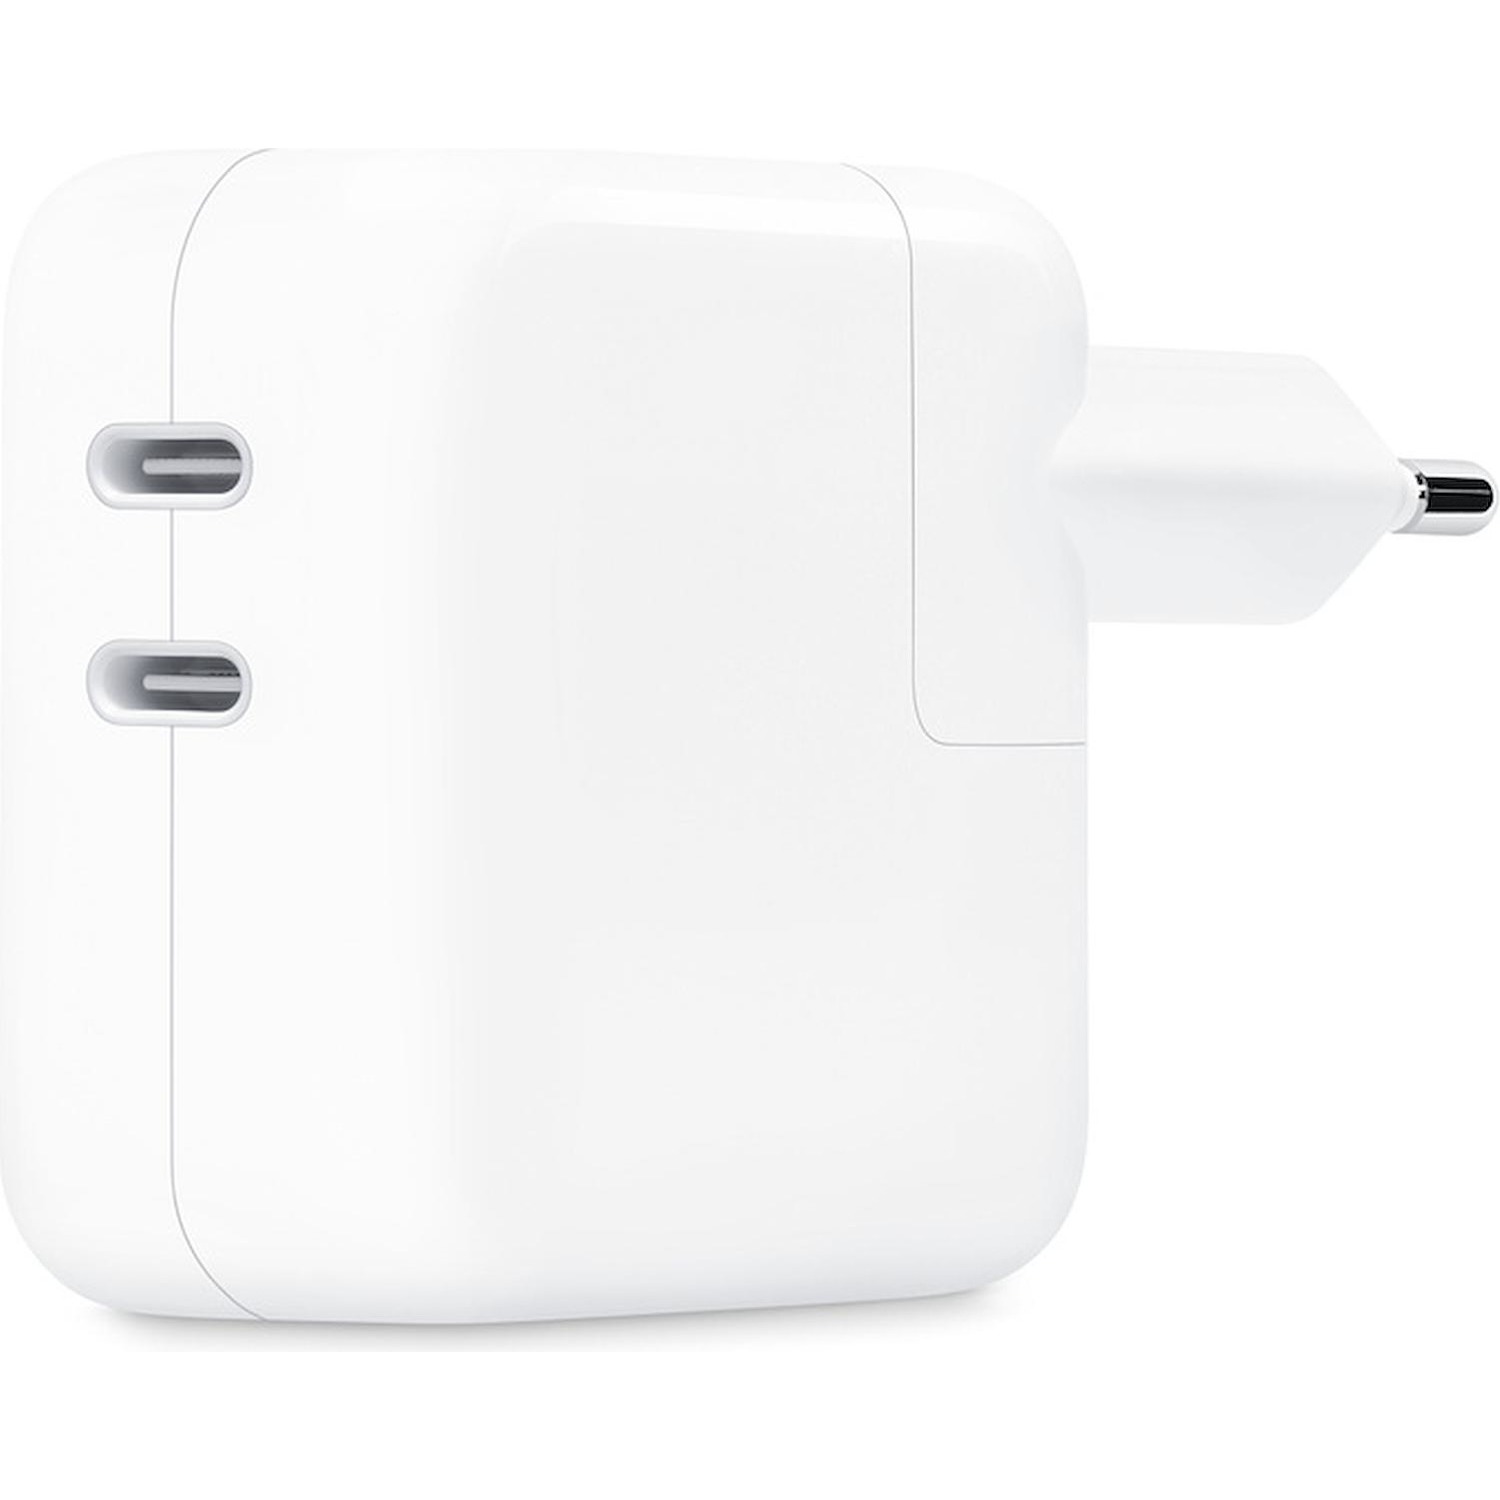 Immagine per Alimentatore Apple USB-C 35W da DIMOStore